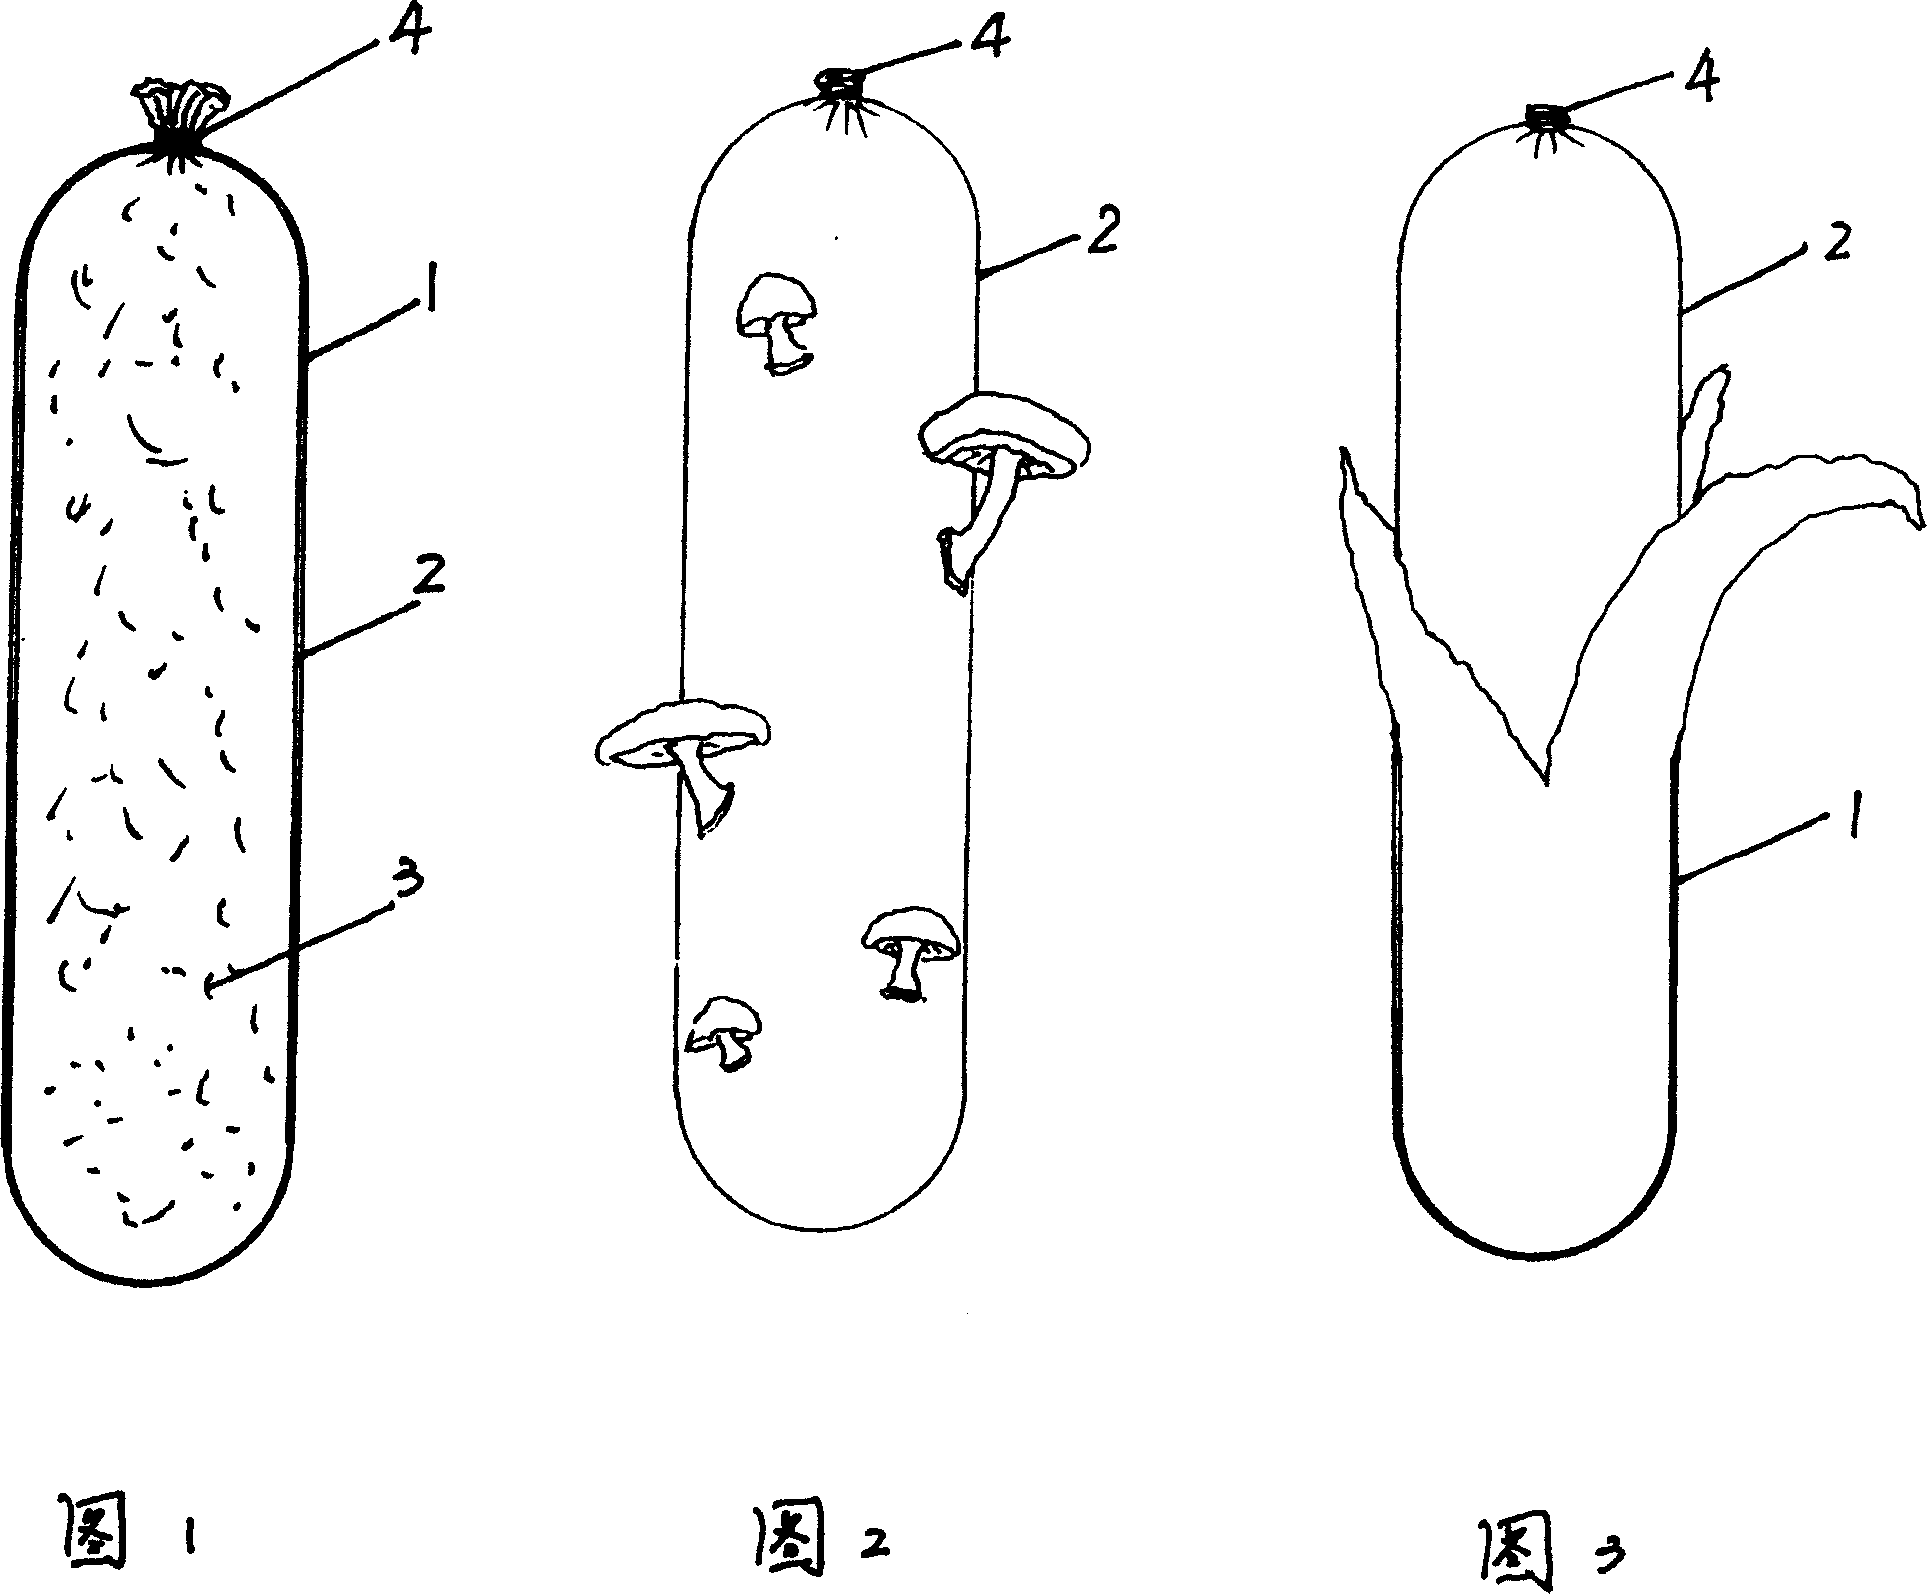 Technics of dual bags for planting shiitake